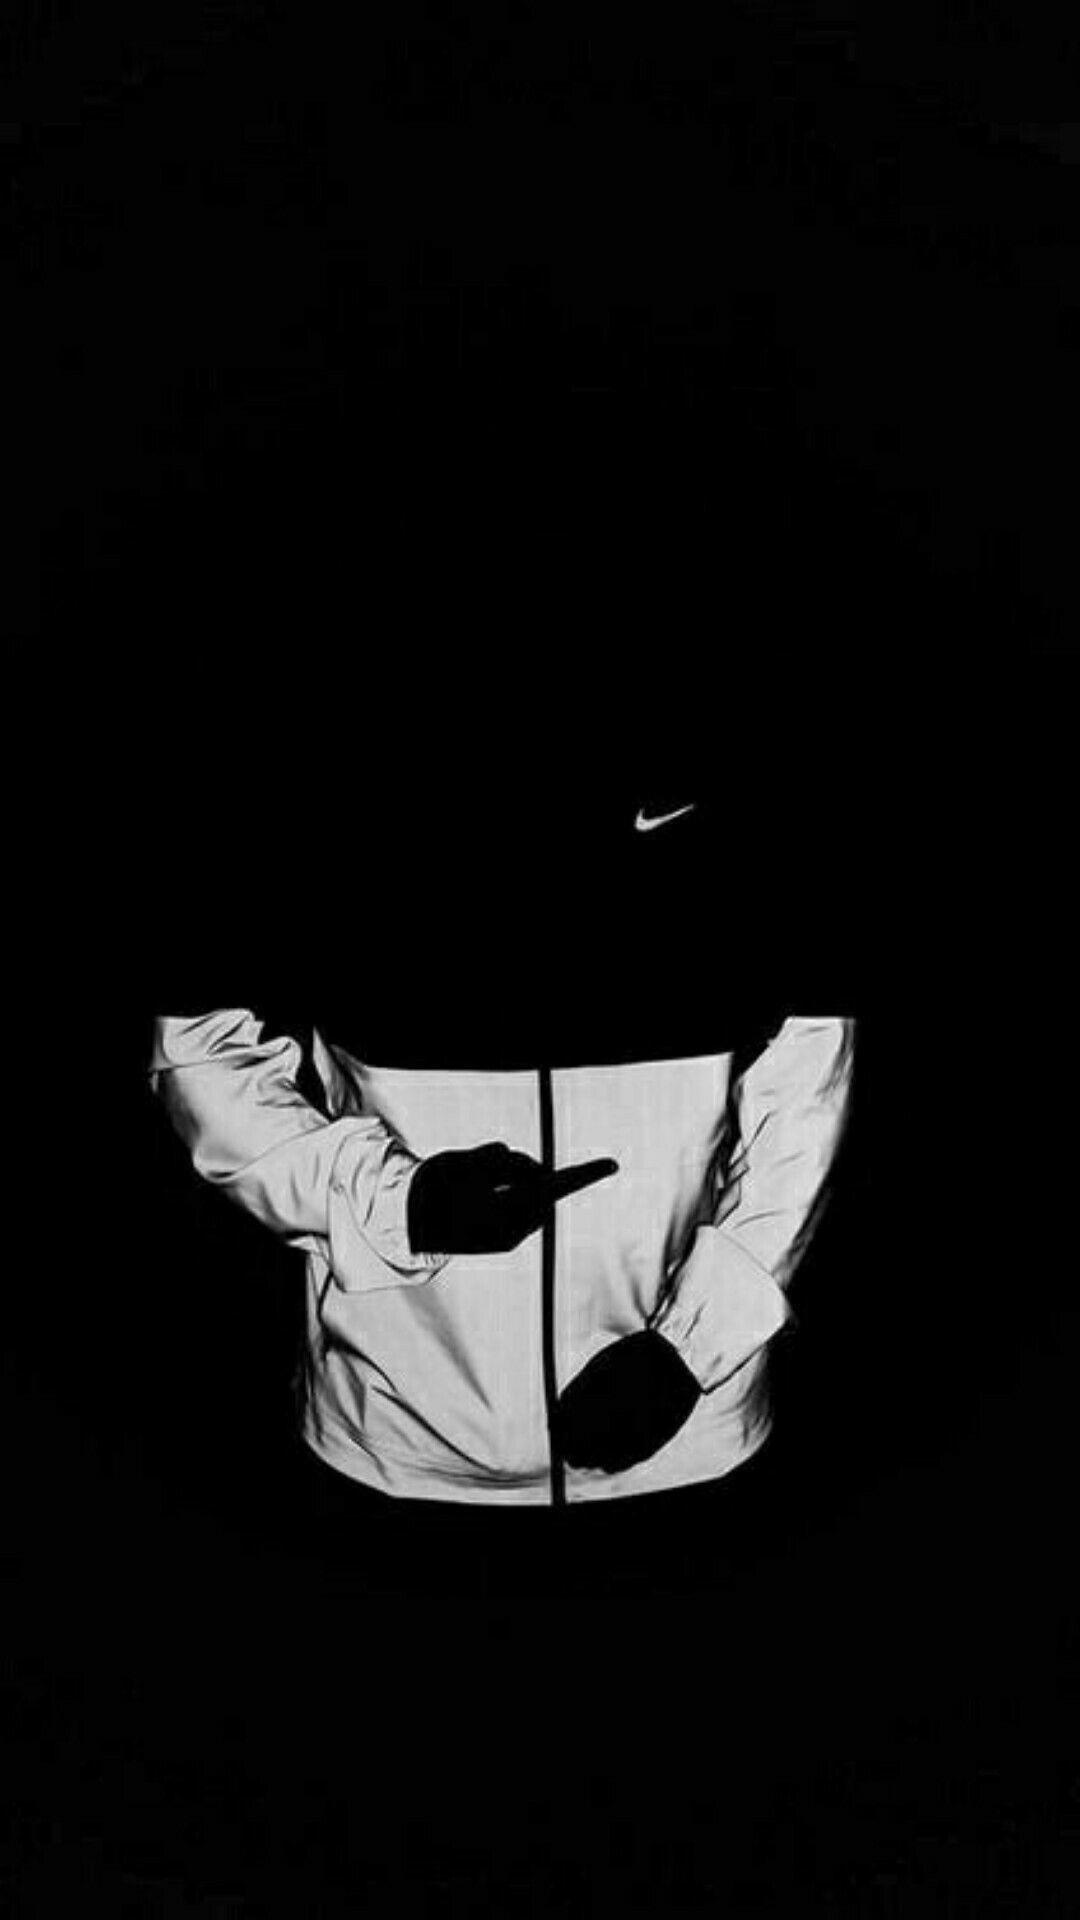 Aesthetic Black And White Nike Wallpaper